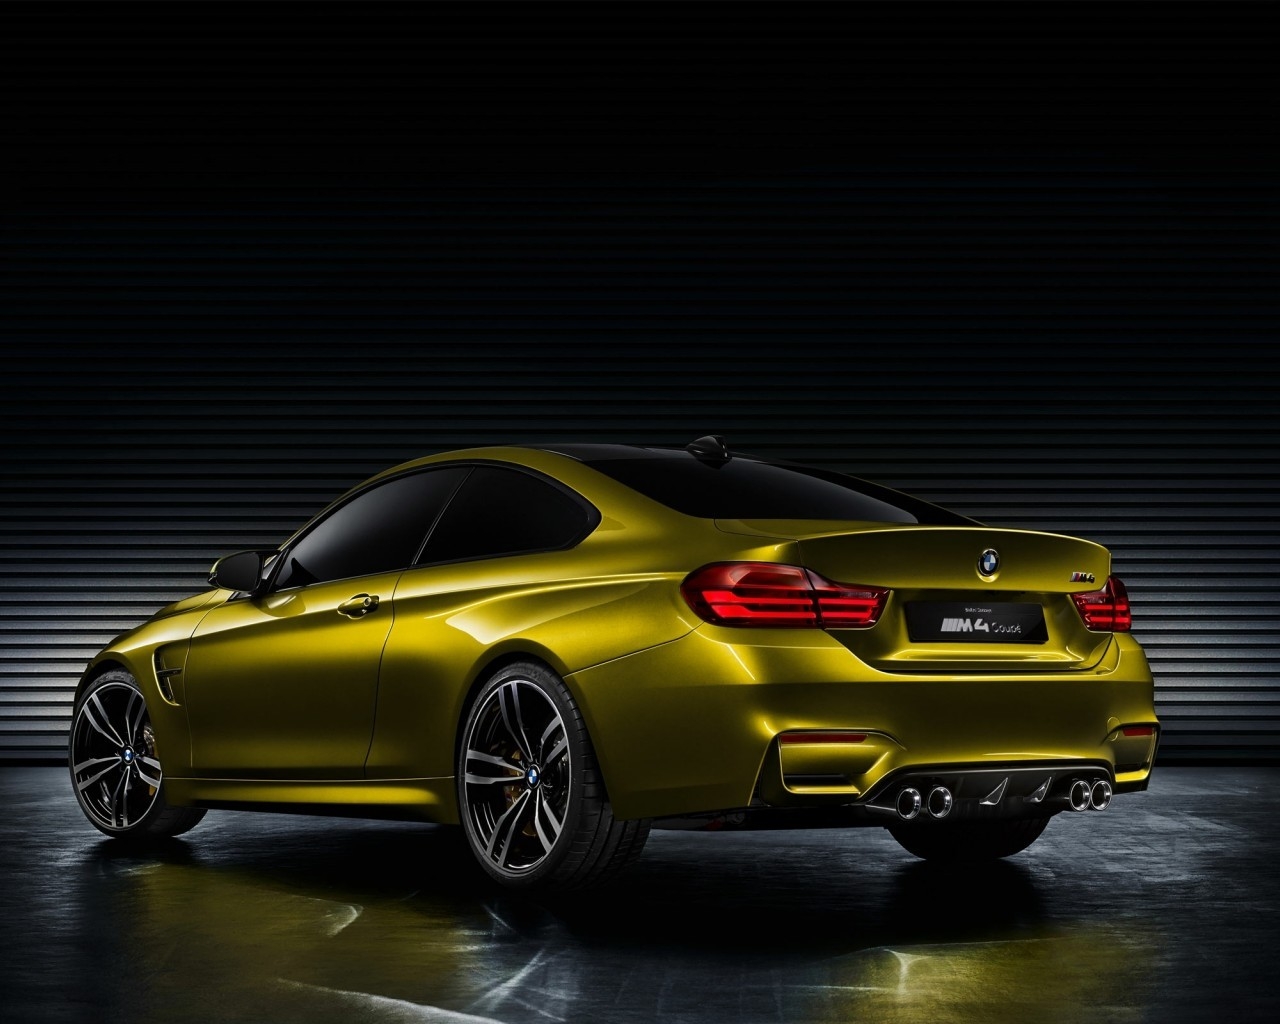 Stunning BMW M4 for 1280 x 1024 resolution